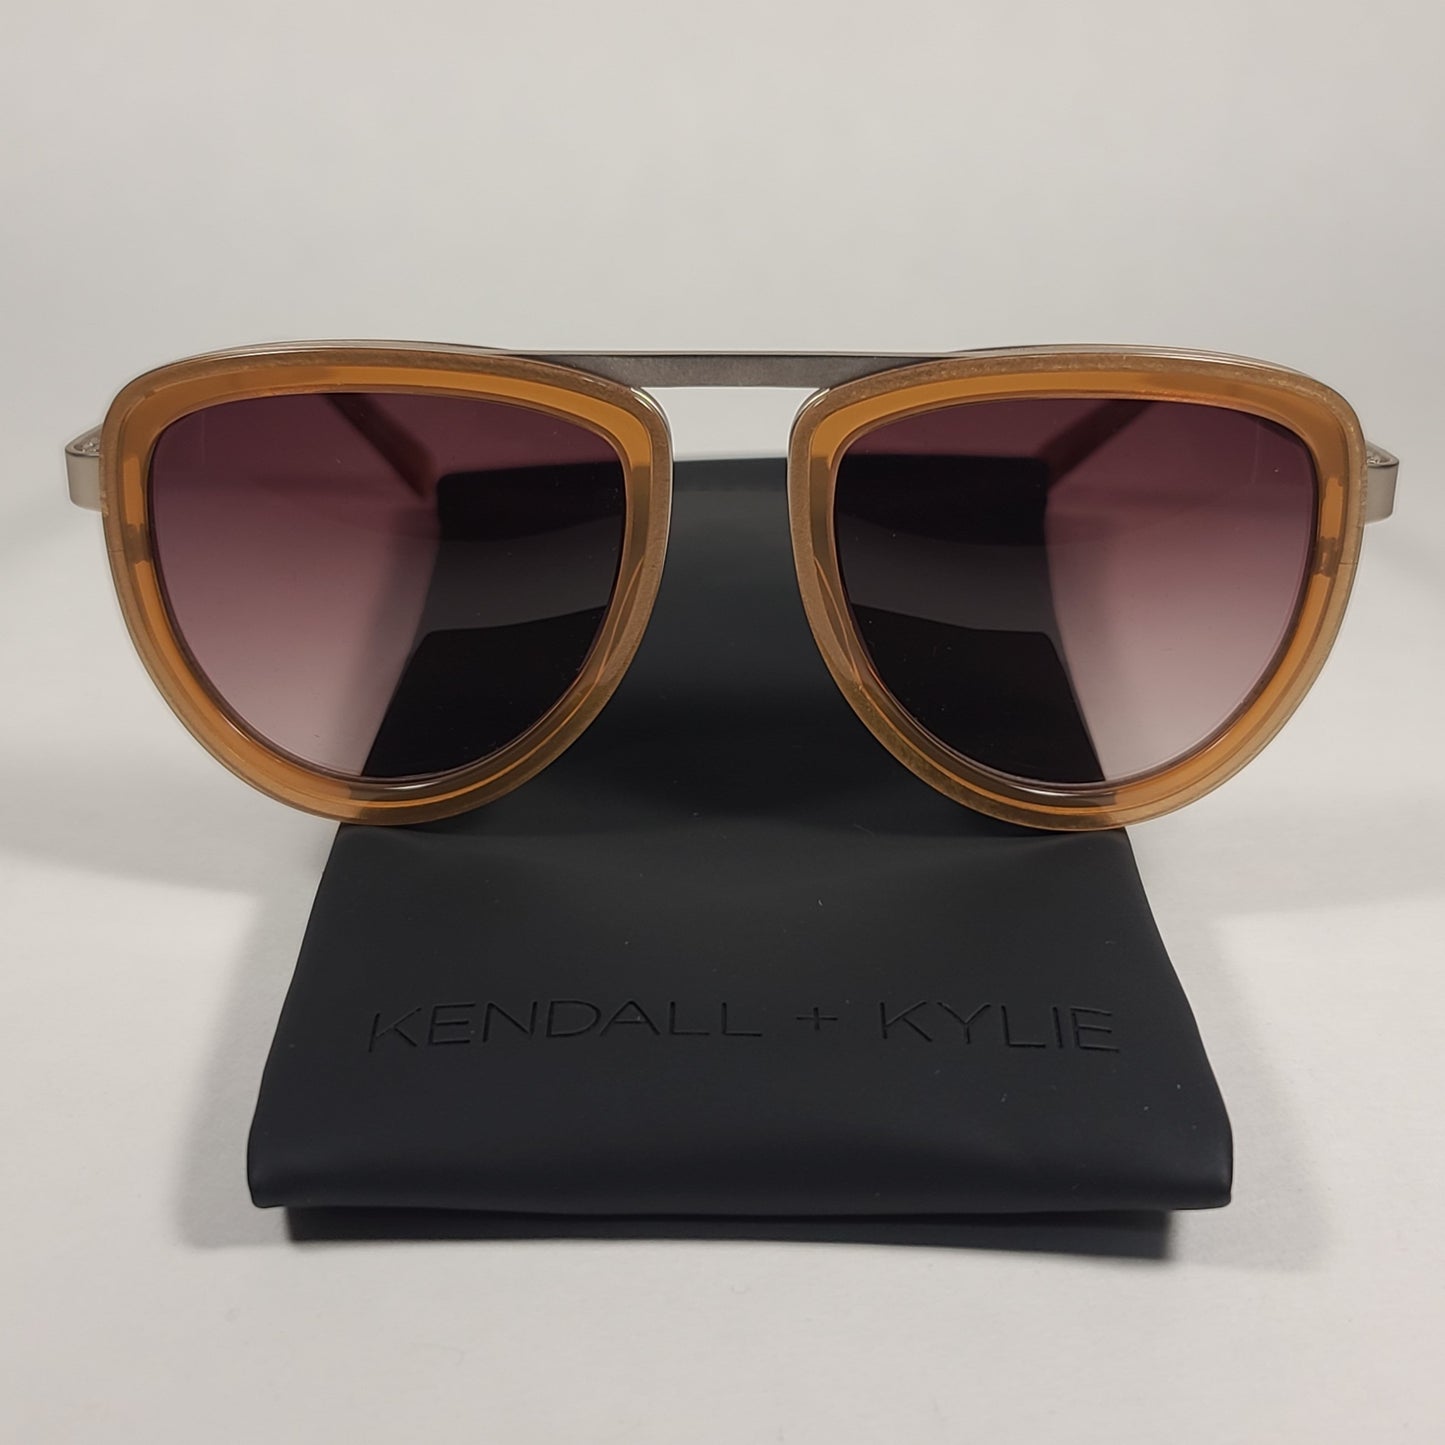 Kendall + Kylie Jones Aviator Sunglasses Shiny Crystal and Light Brown With Gradient Lens KK5009D 207 - Sunglasses